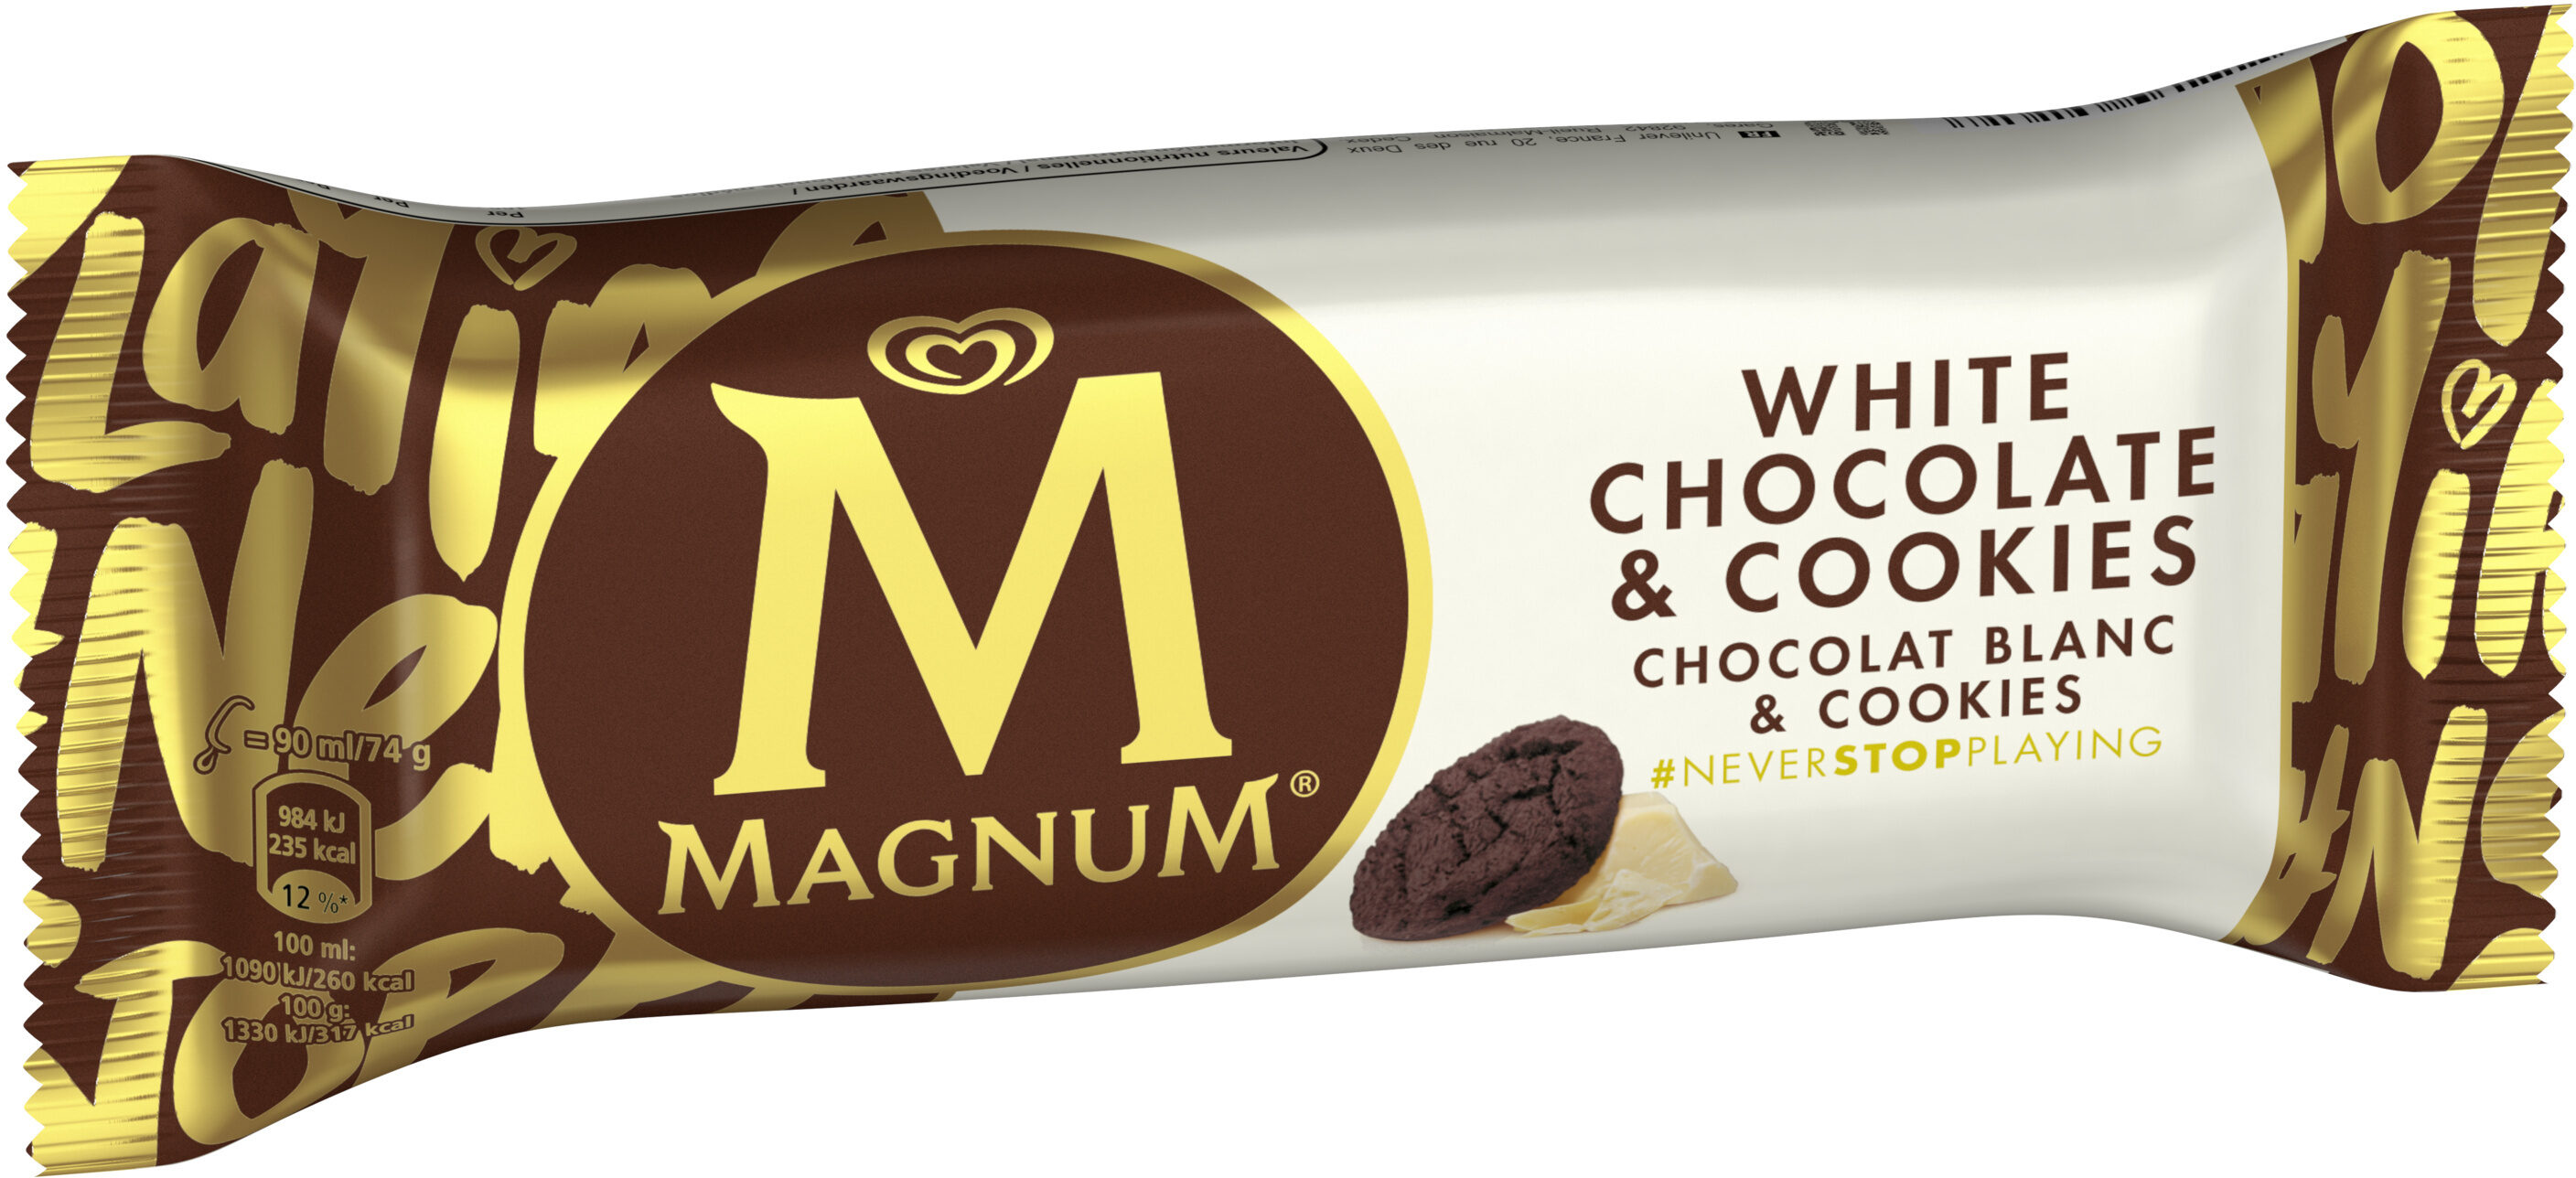 Magnum - White chocolate & cookies - Producte - en